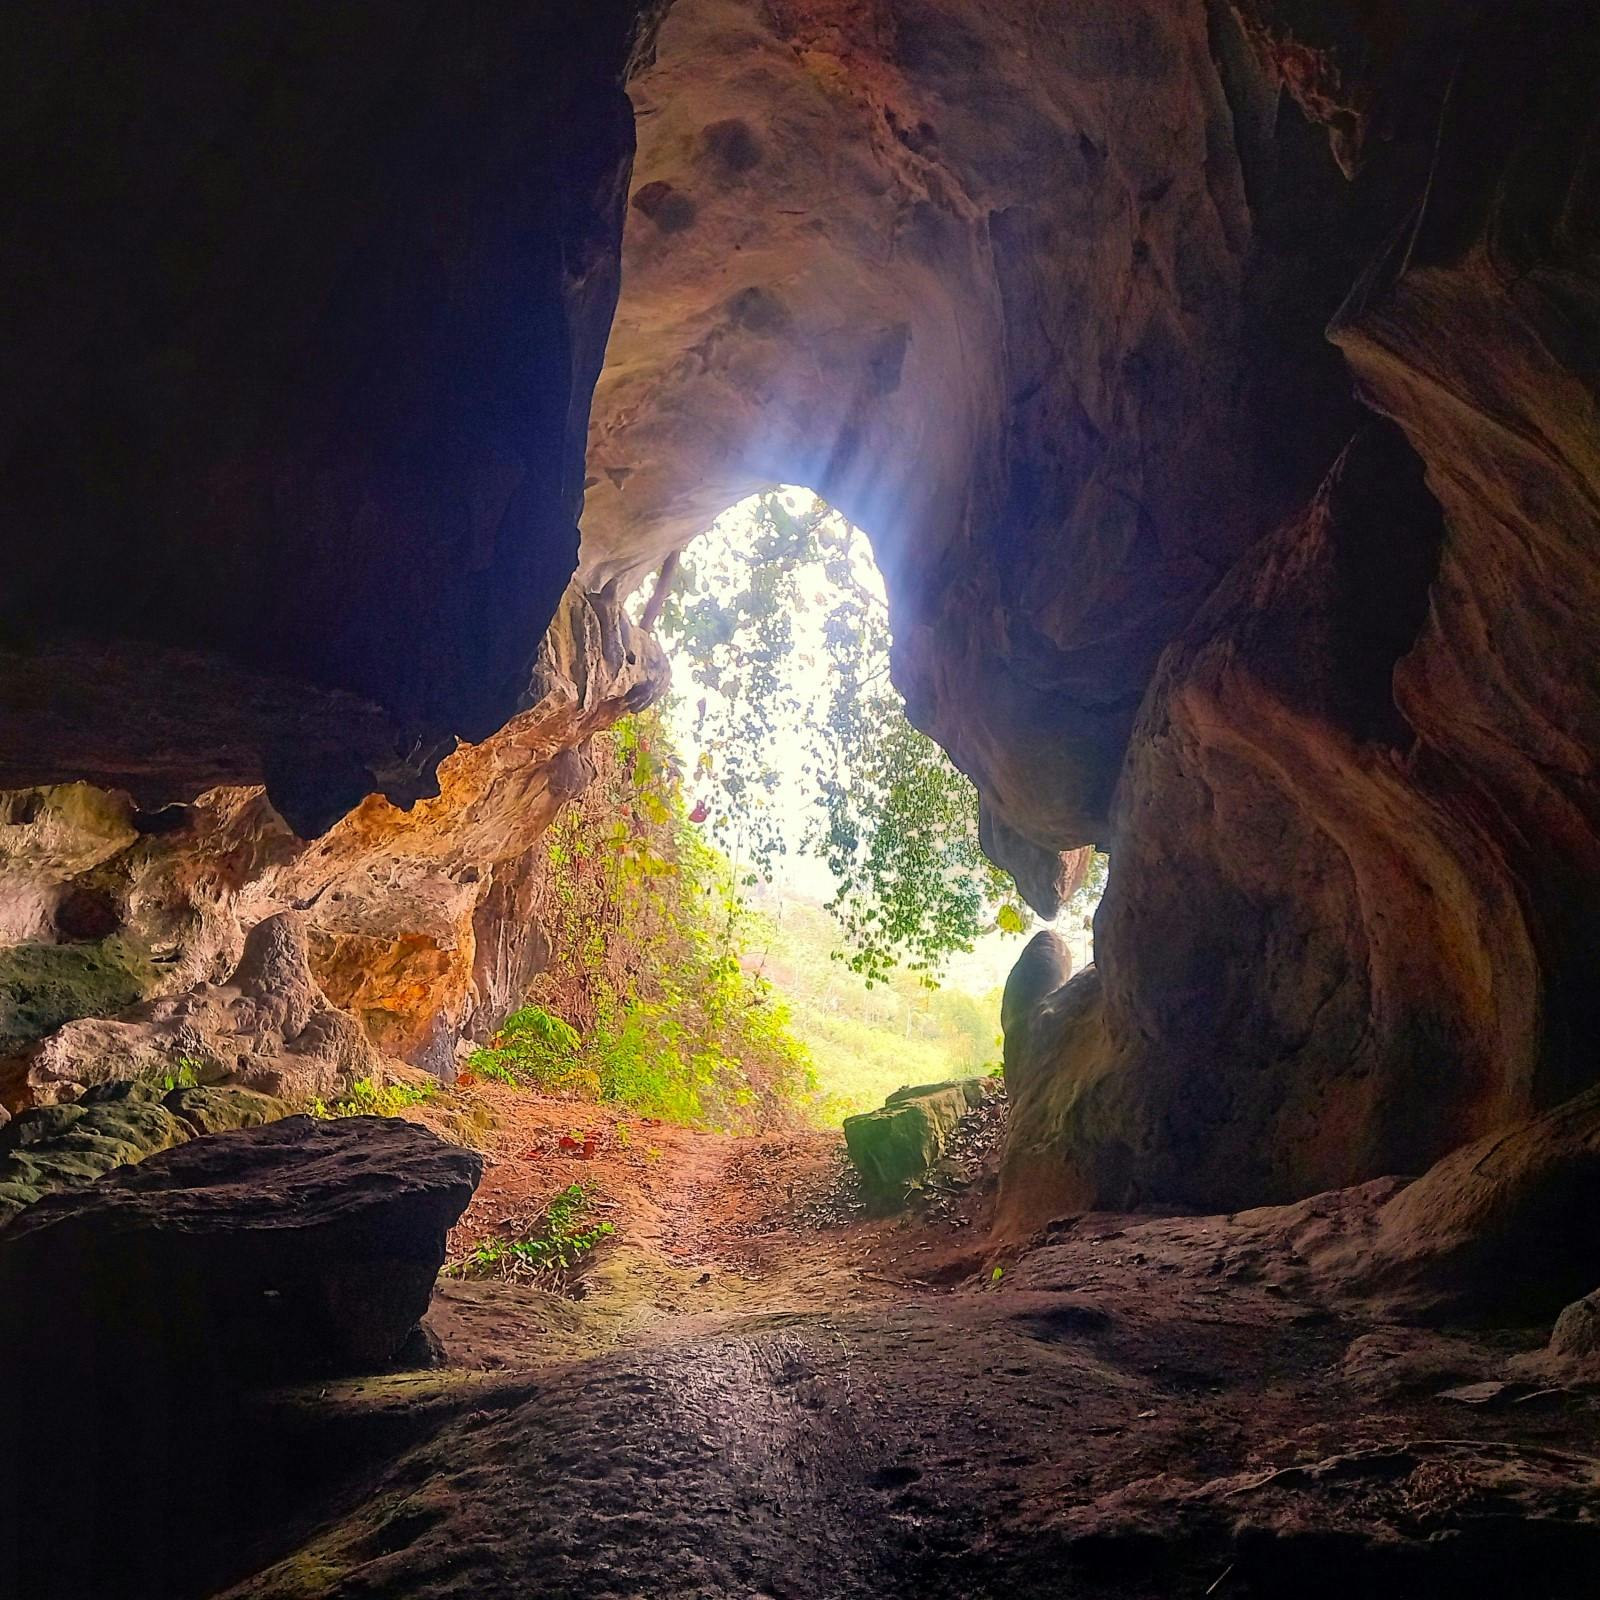 Hang Bua & Tham Om Caves, Nghe An Province, Vietnam